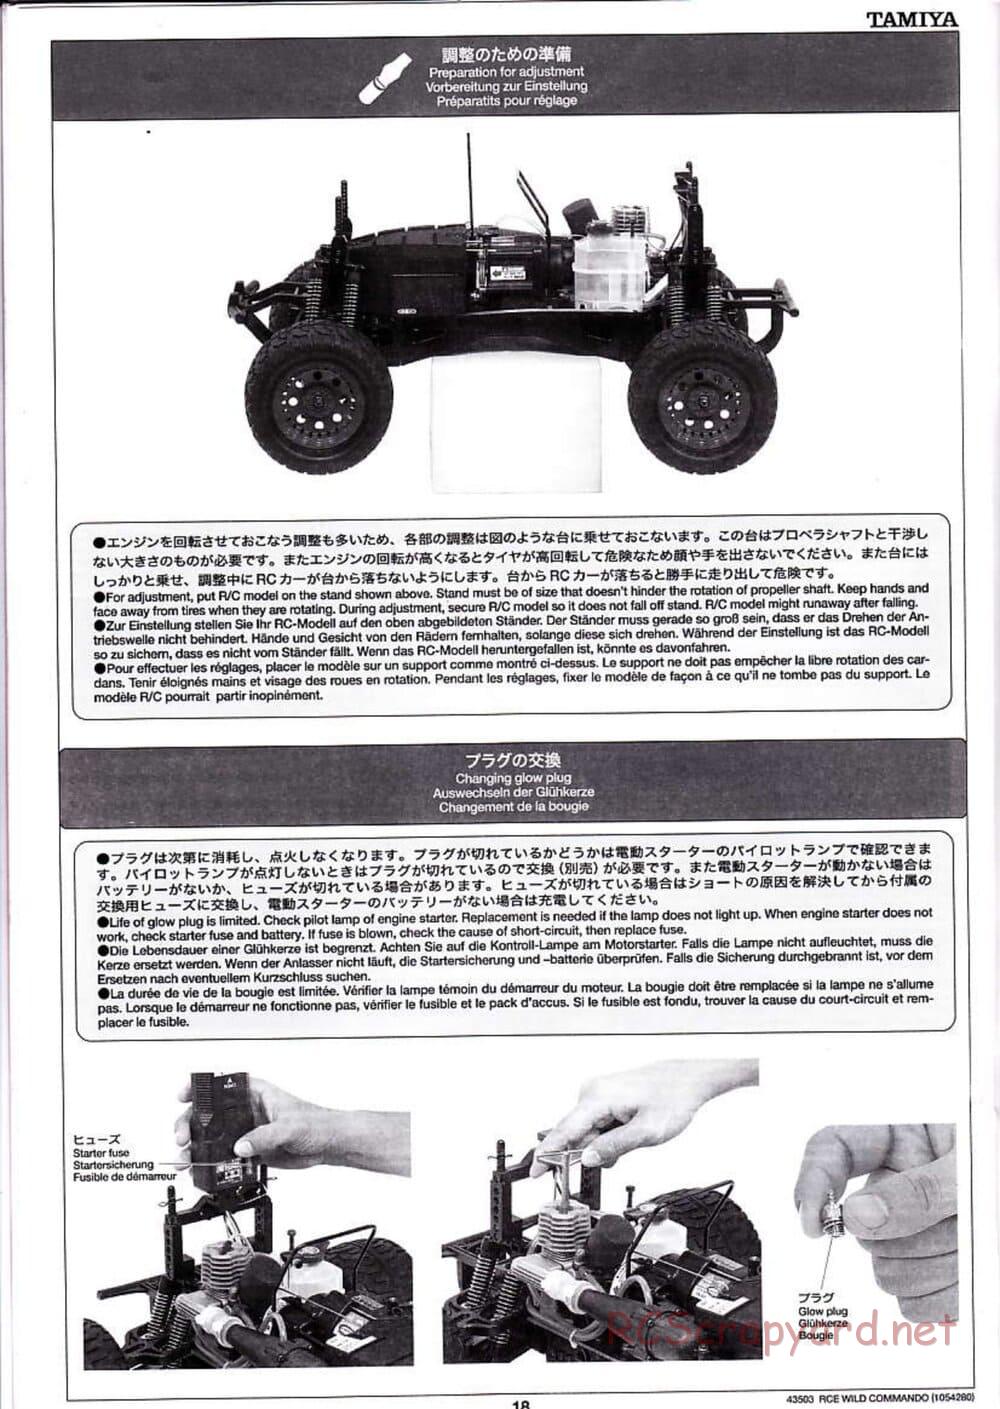 Tamiya - Wild Commando - TGM-02 Chassis - Manual - Page 18